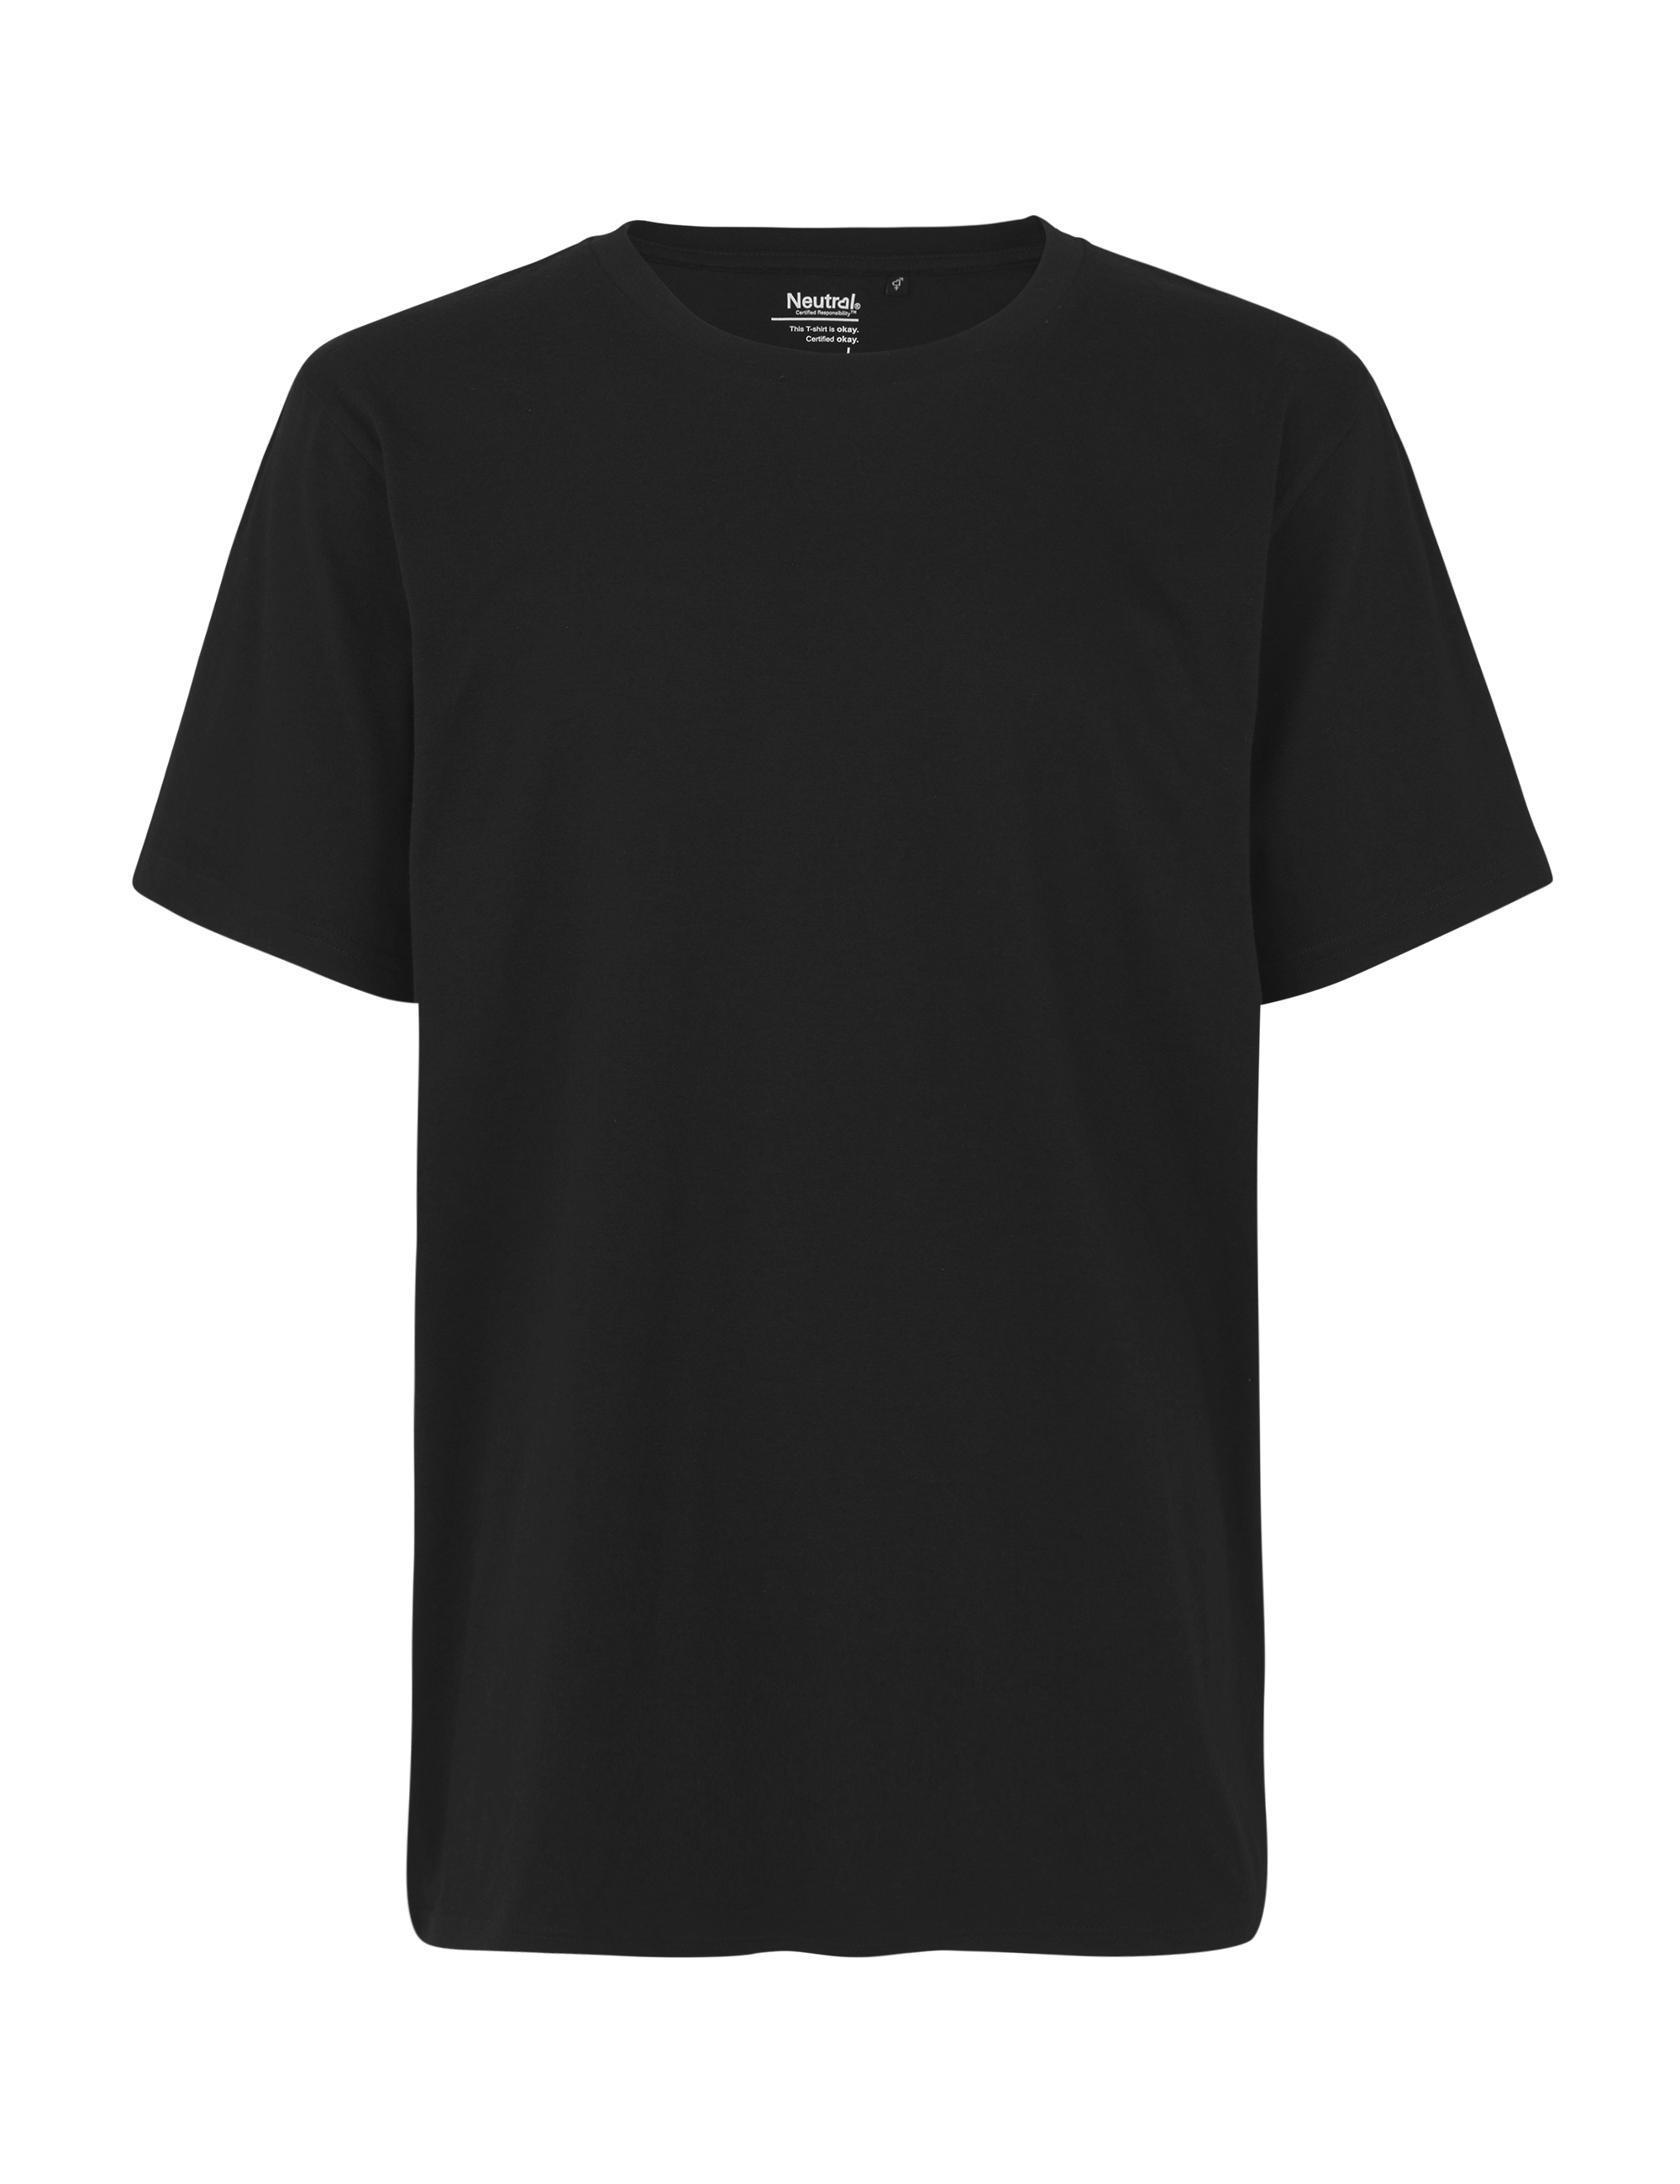 Fairtrade Workwear Organic Cotton T-Shirt 155 g/m² Neutral® Black S